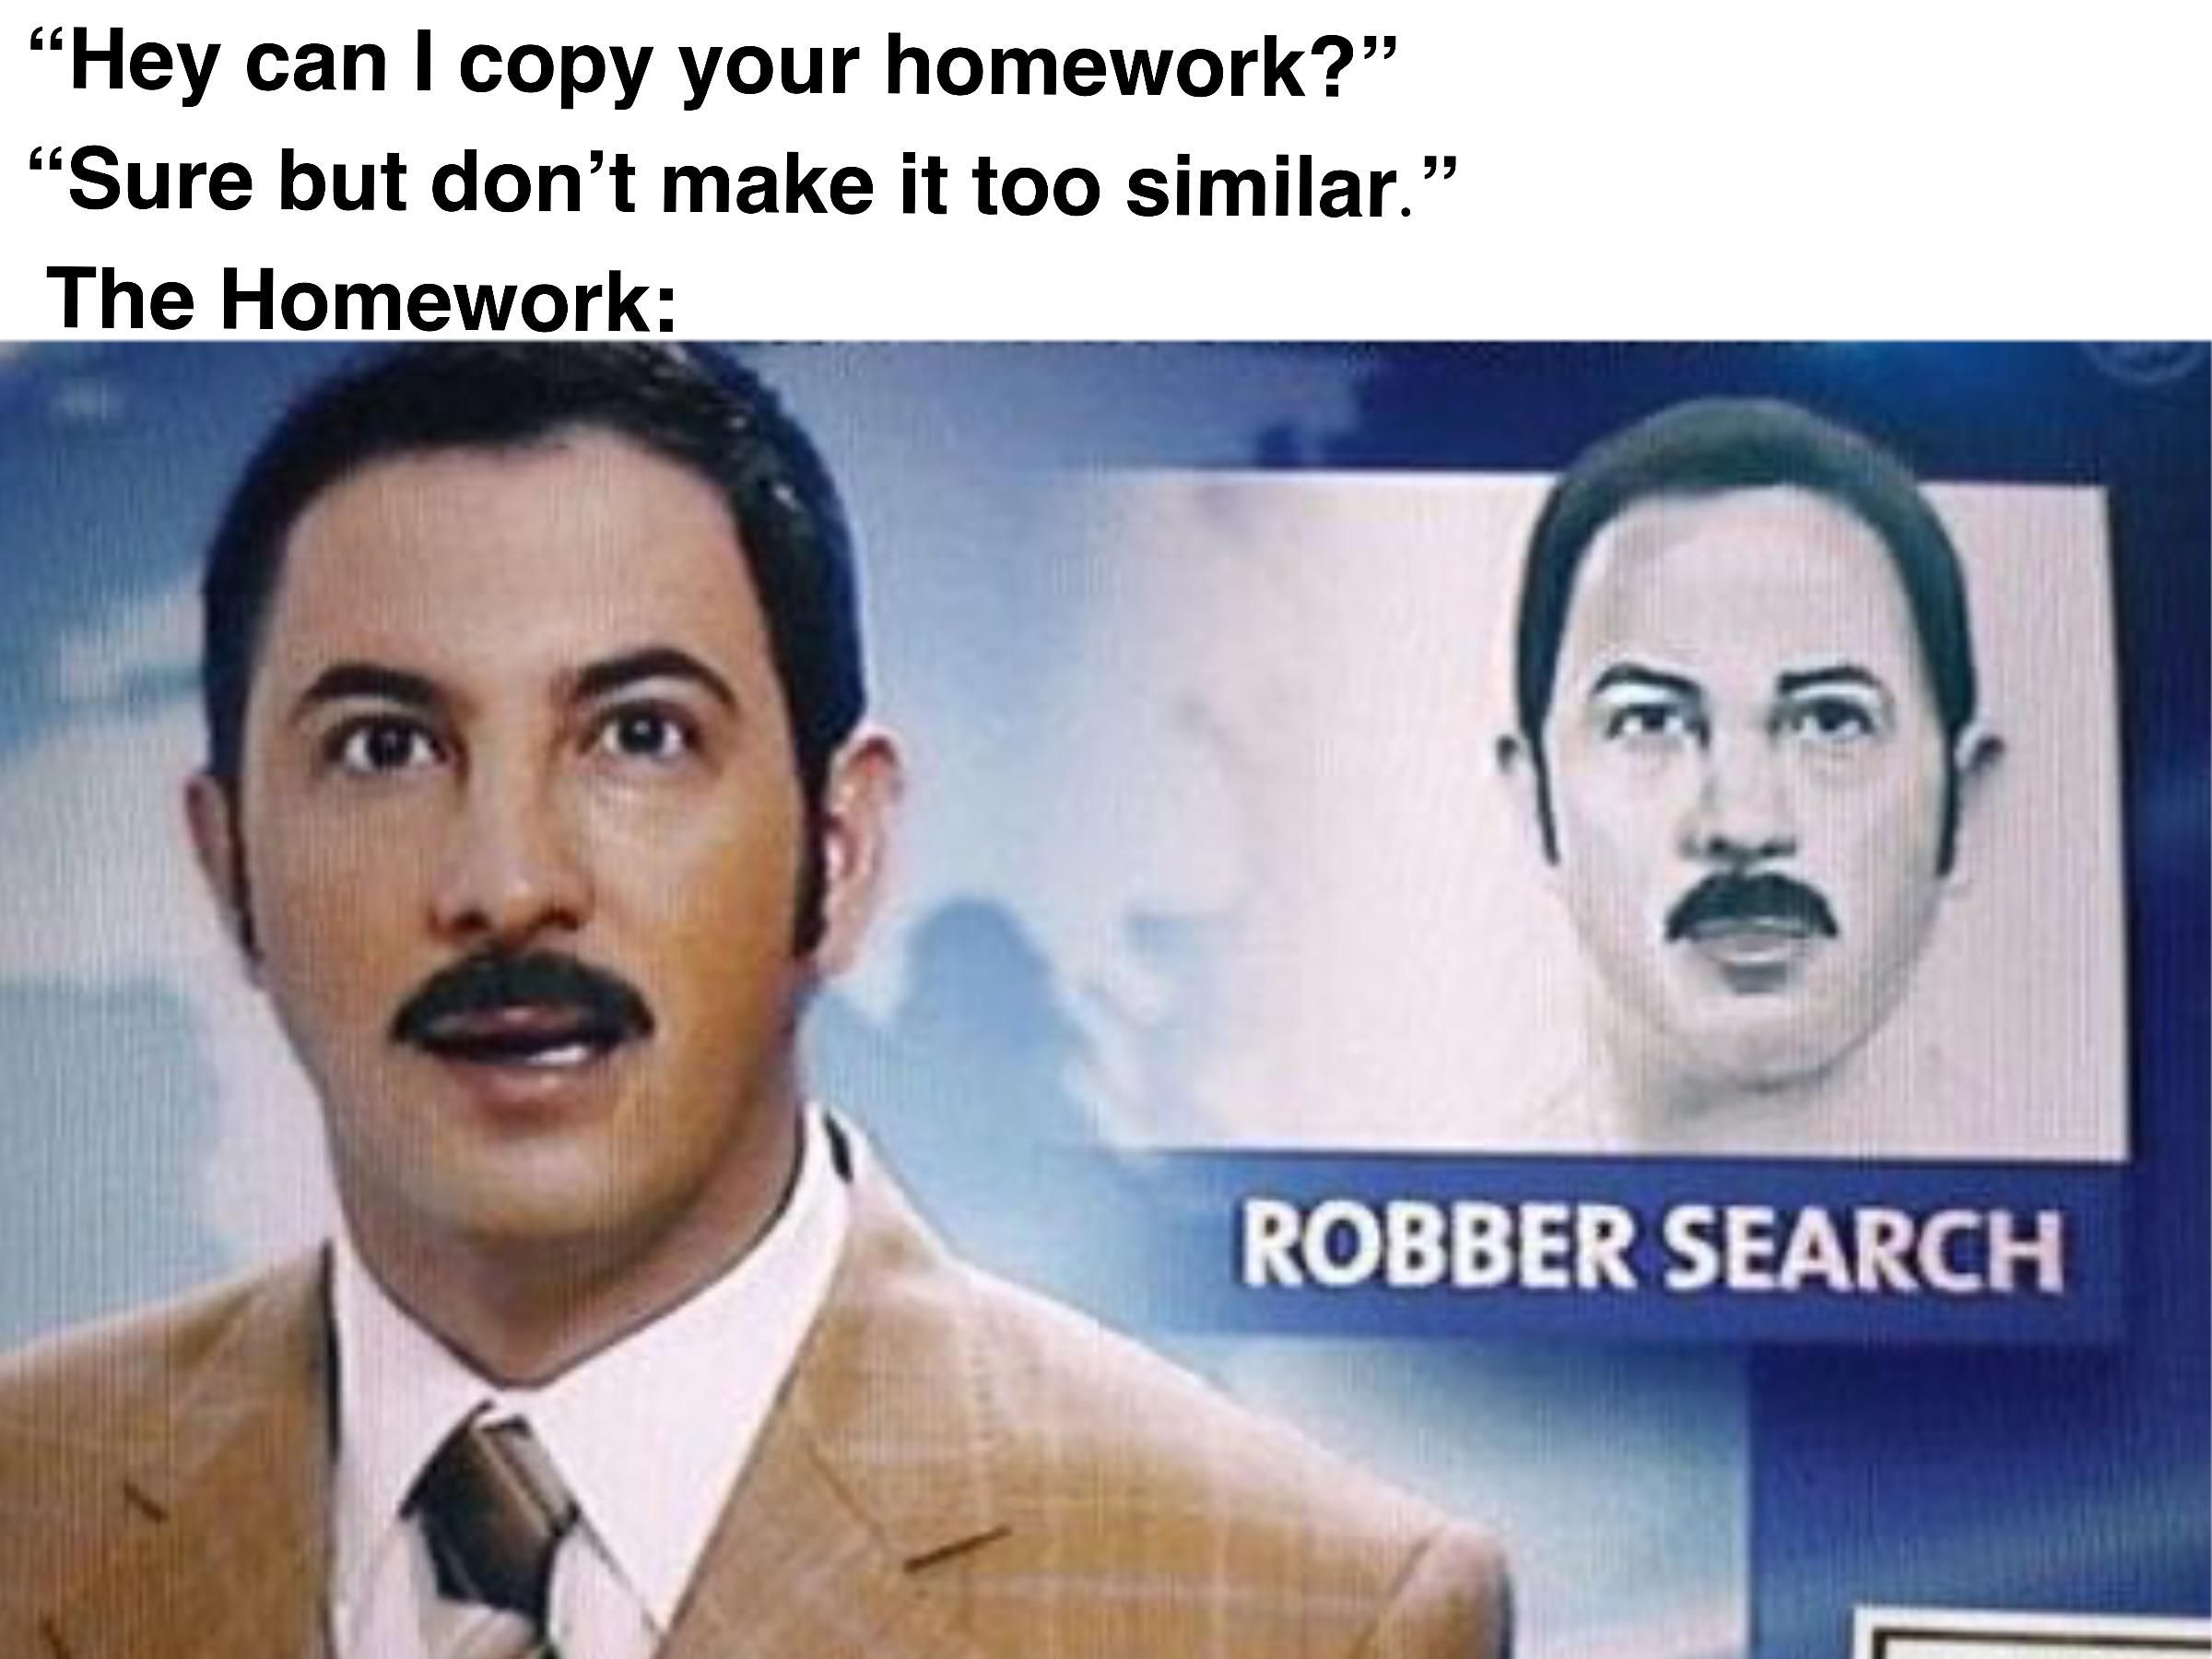 Homework sure sucks